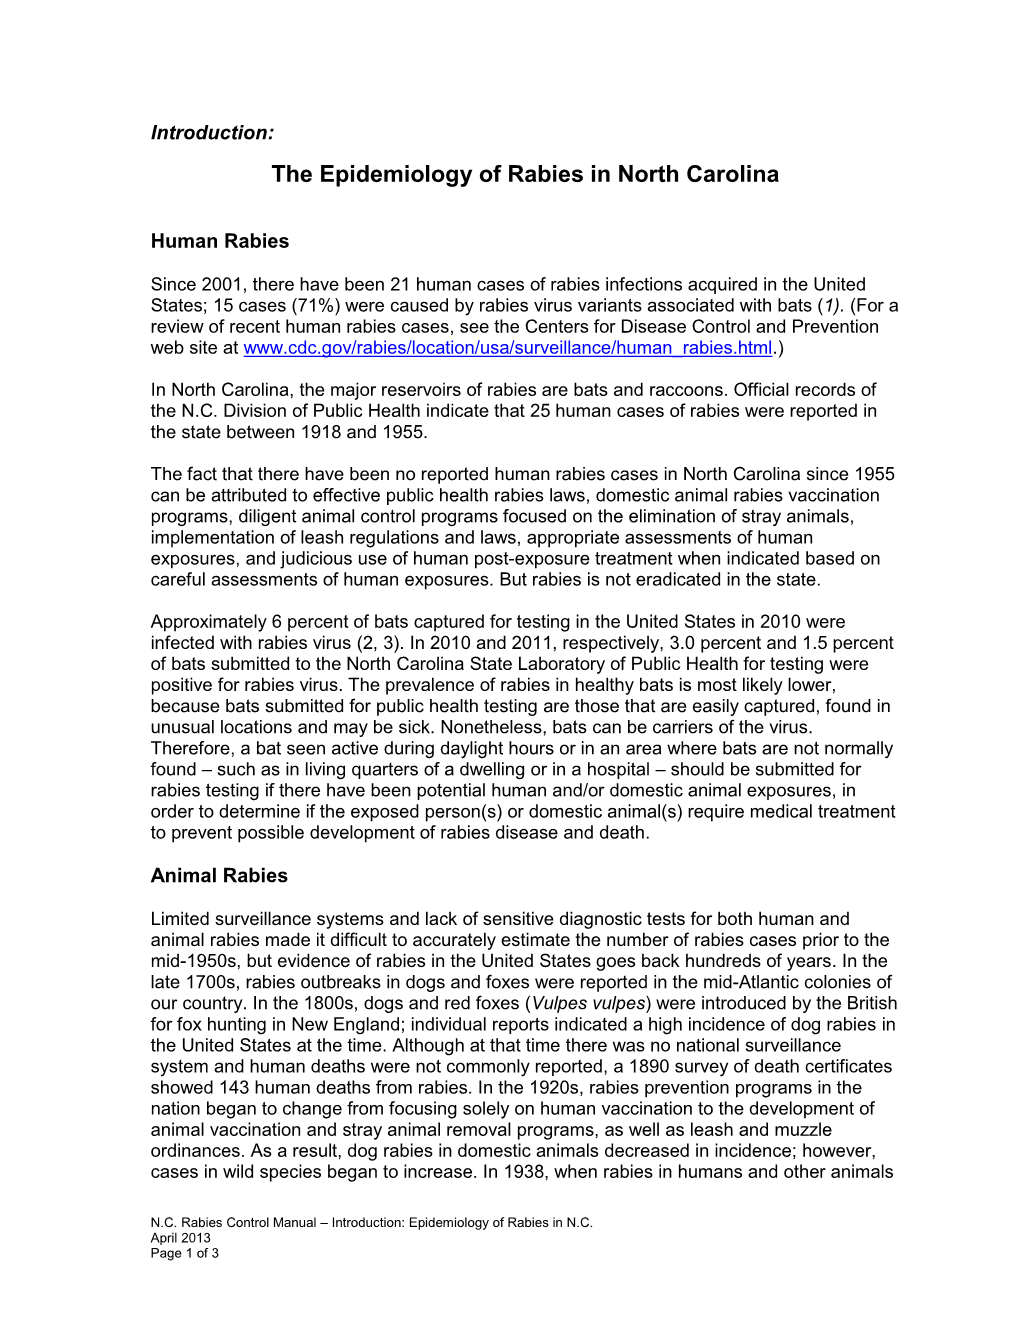 Epidemiology of Rabies in North Carolina